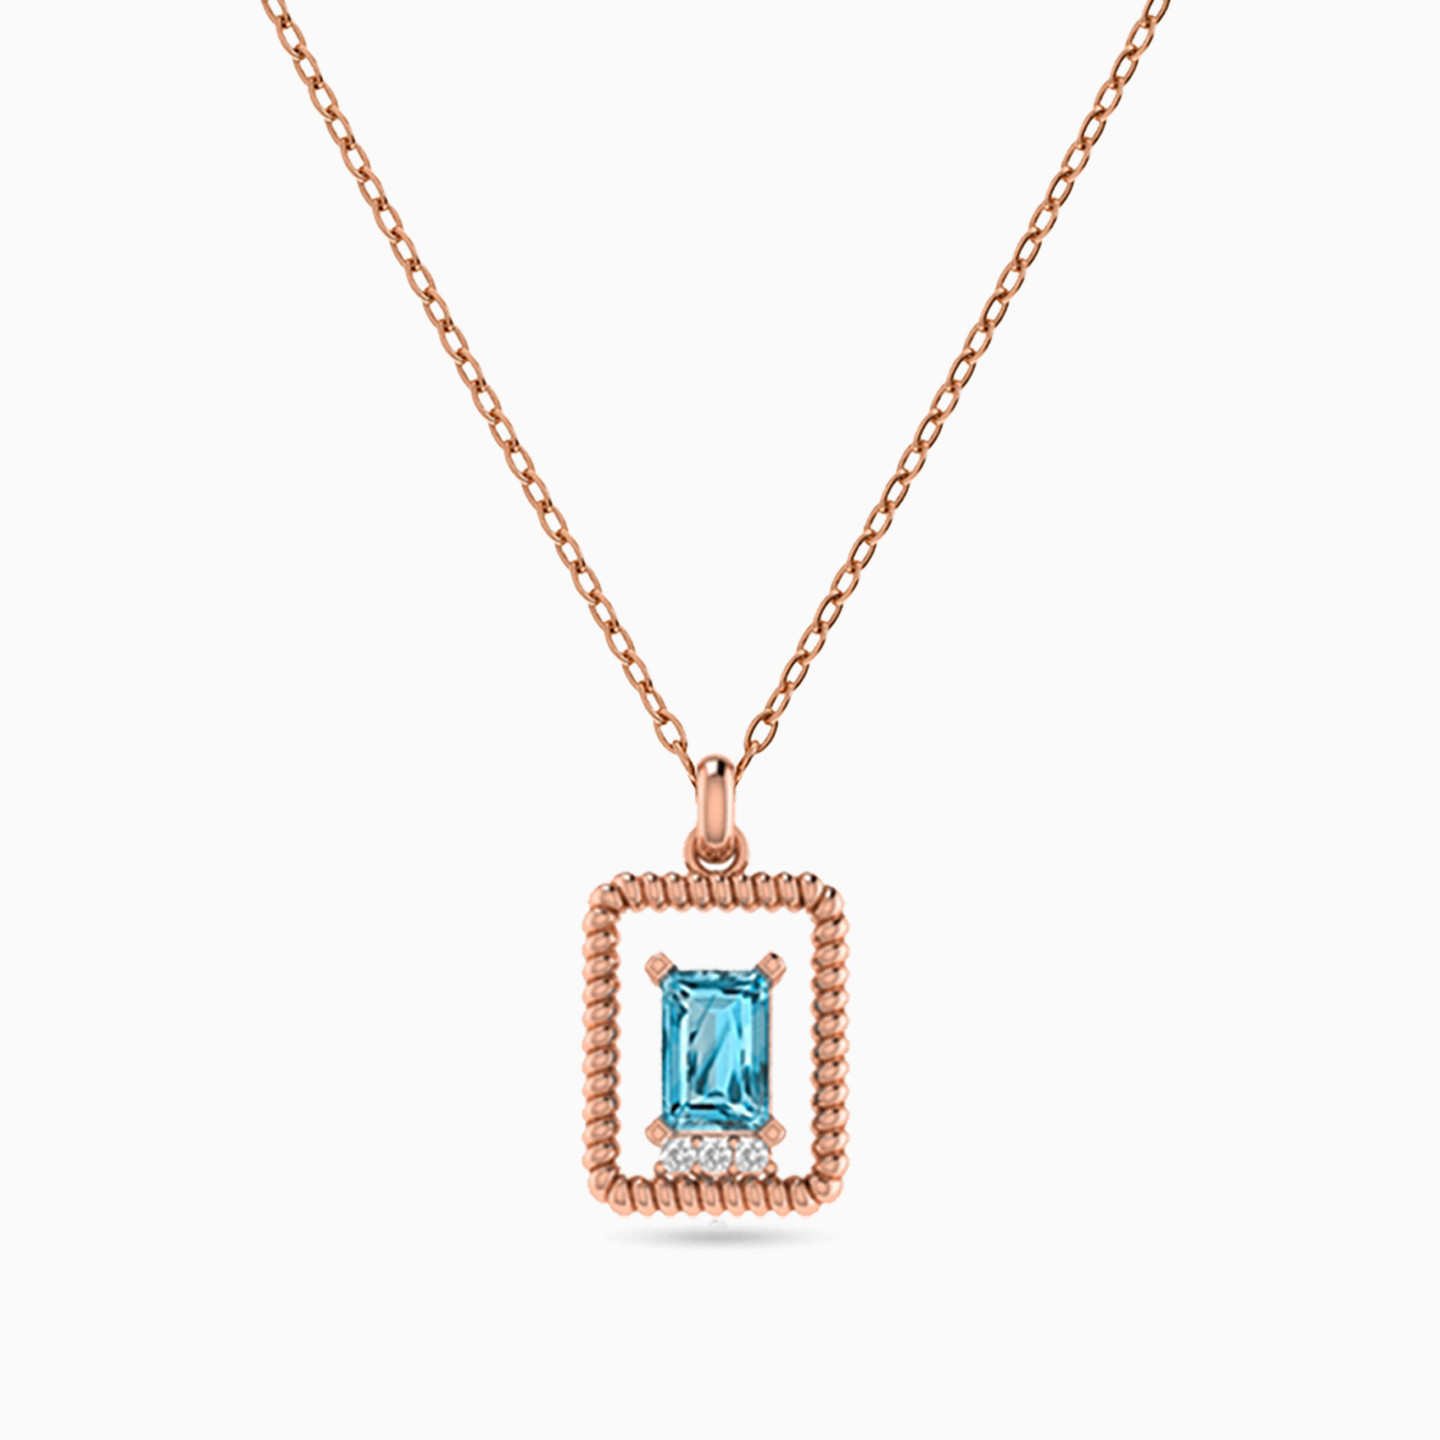 18K Gold Diamond & Colored Stones Pendant Necklace